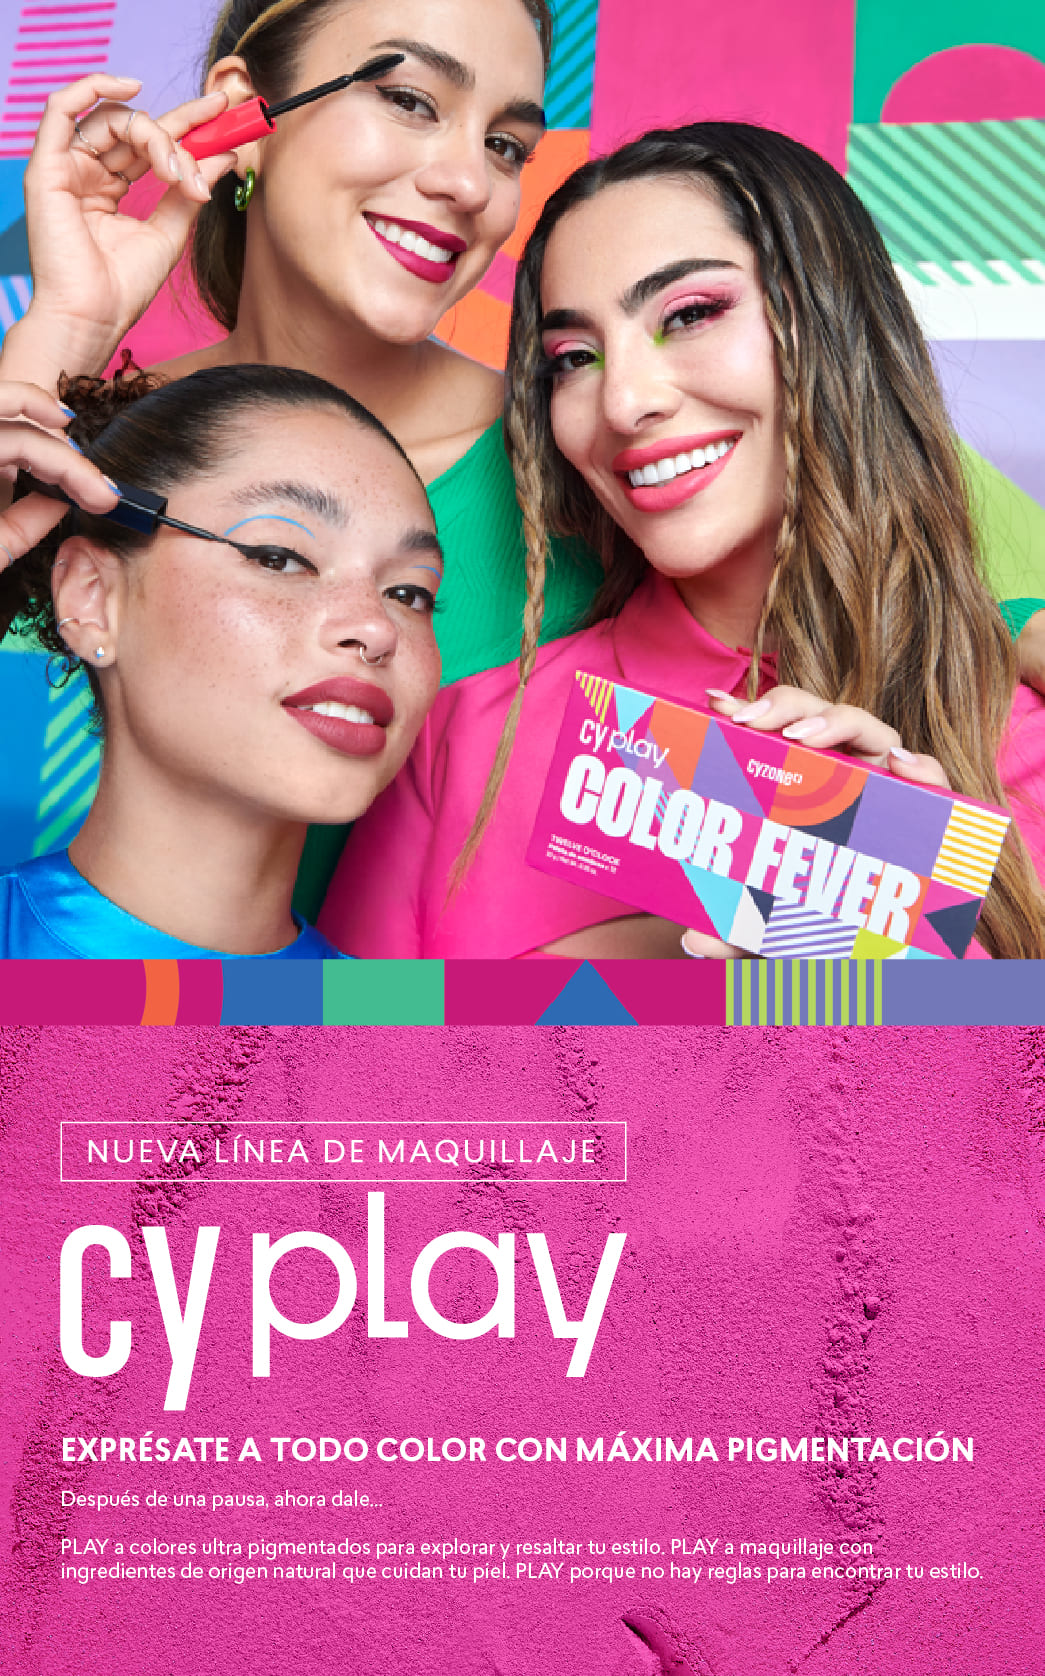 Linea de maquillaje Cyplay de Cyzone